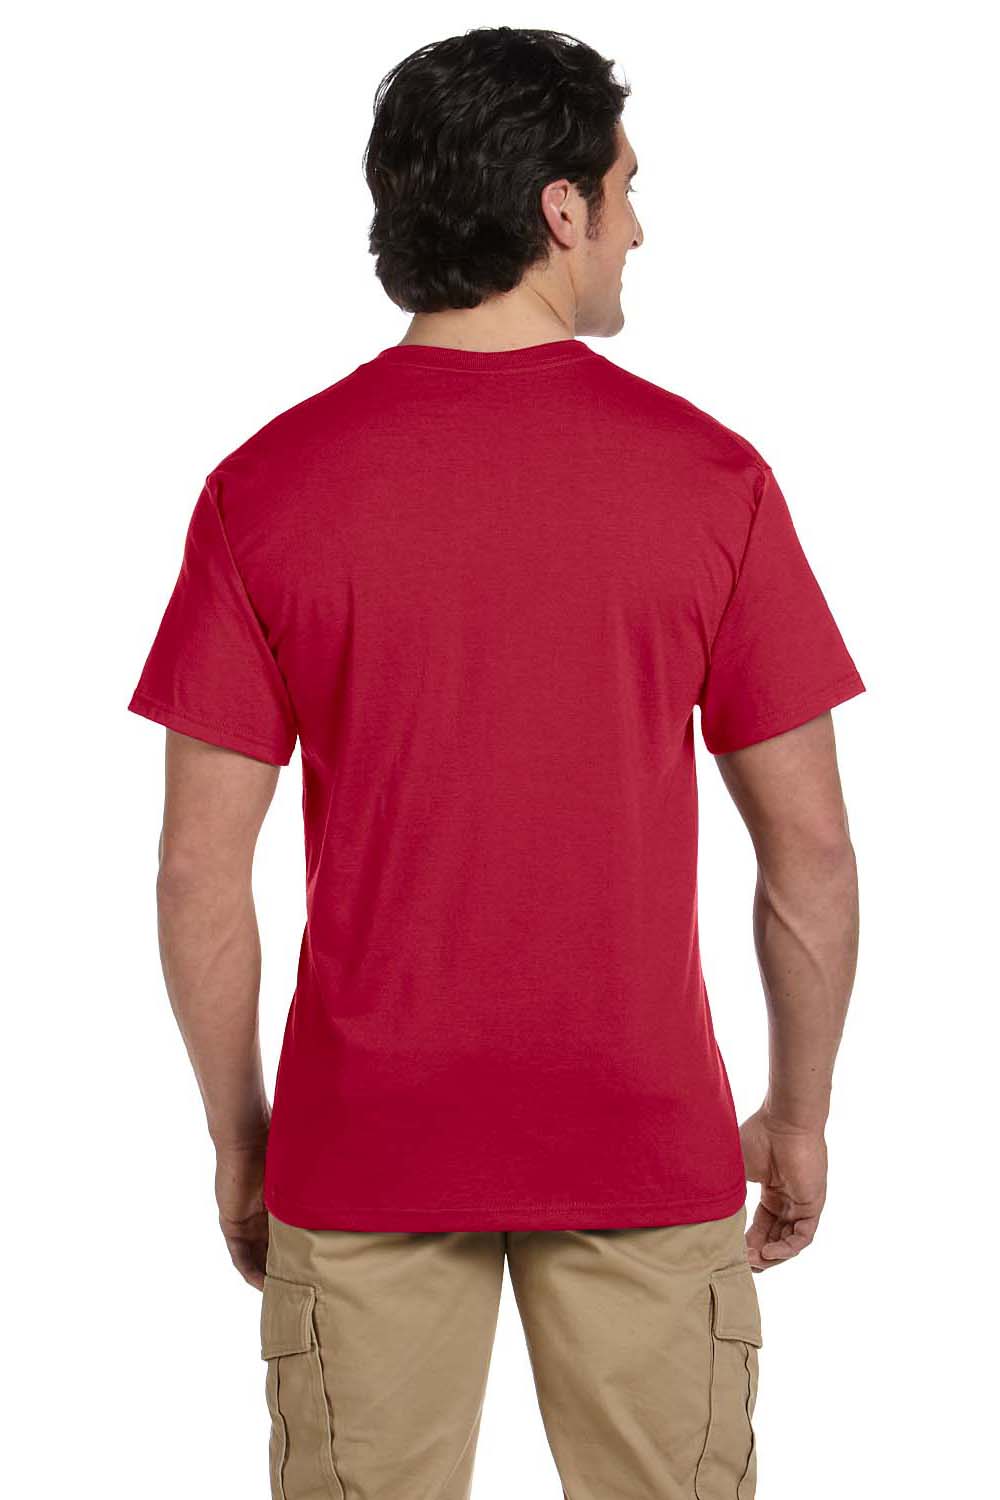 Jerzees 29P Mens Dri-Power Moisture Wicking Short Sleeve Crewneck T-Shirt w/ Pocket Red Back